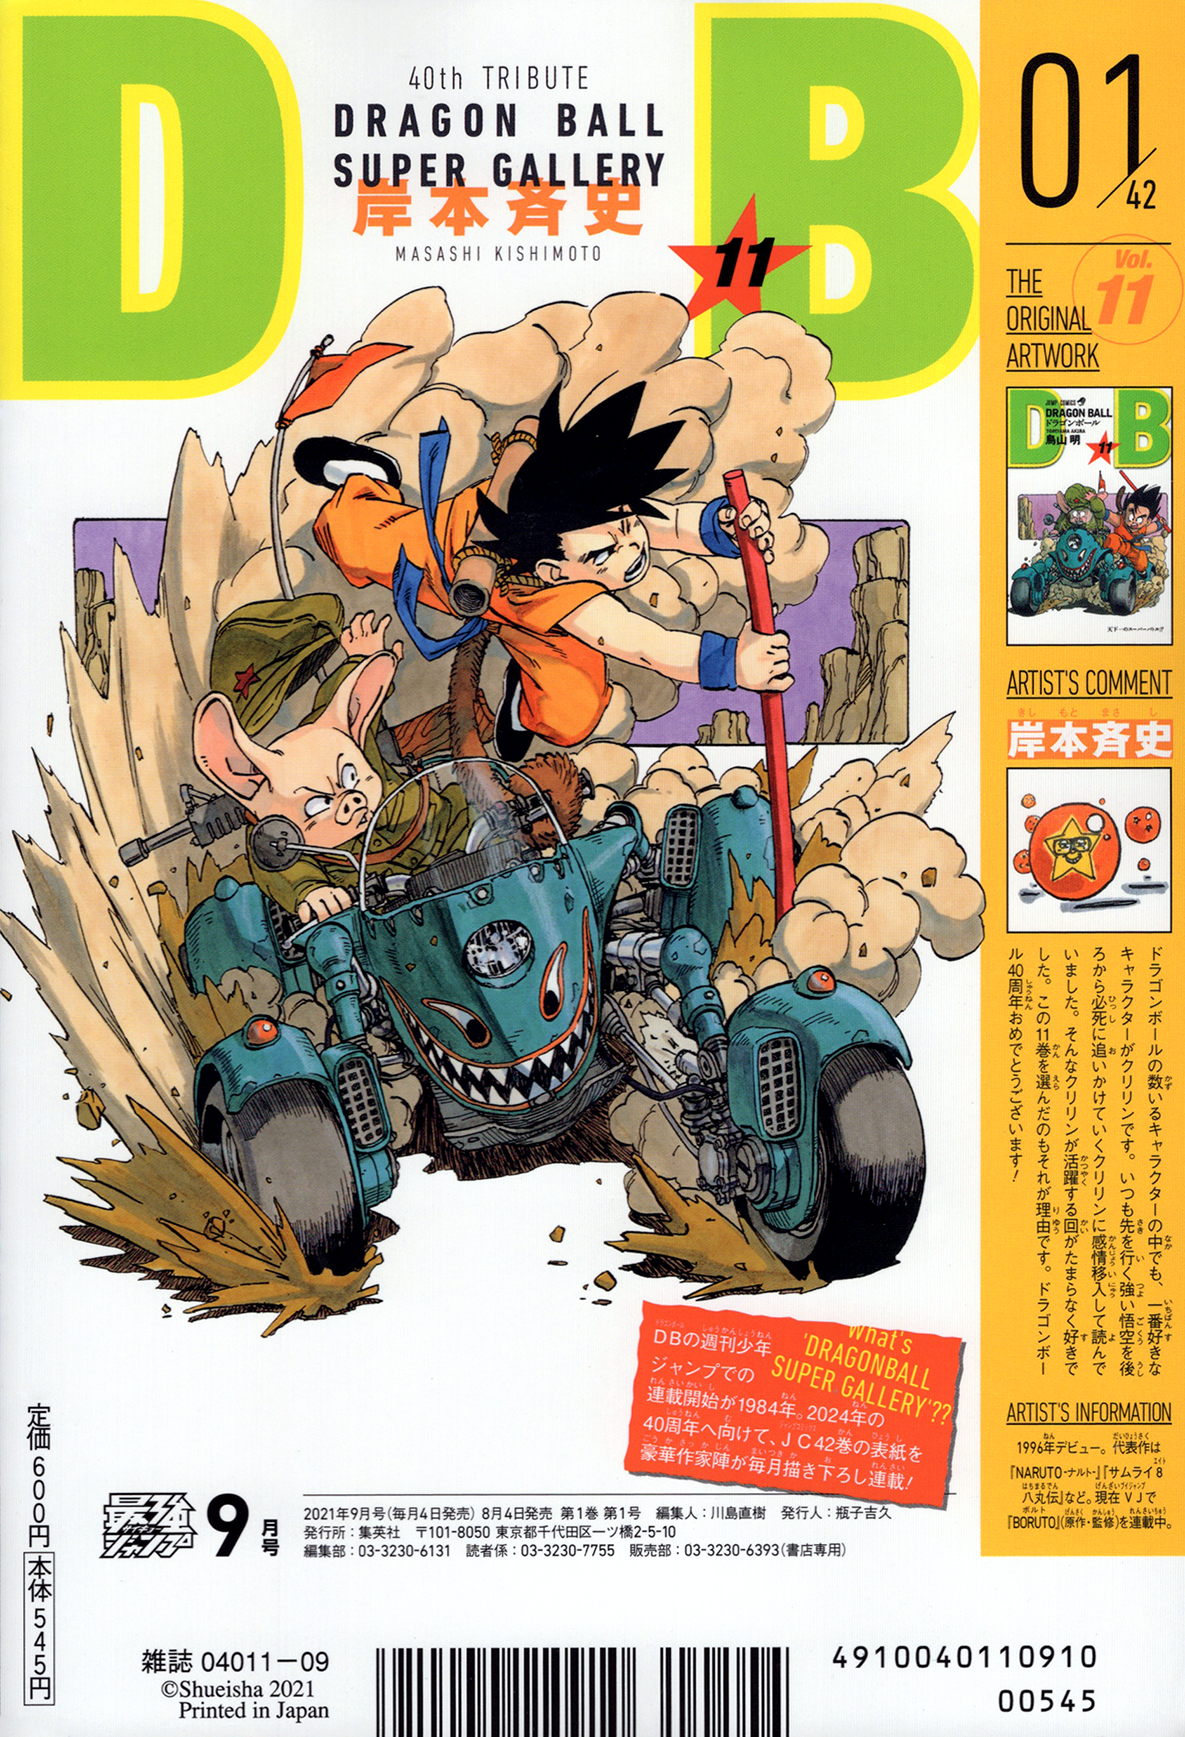 Dragon Ball Evolution: A 10th Anniversary Retrospective • Kanzenshuu